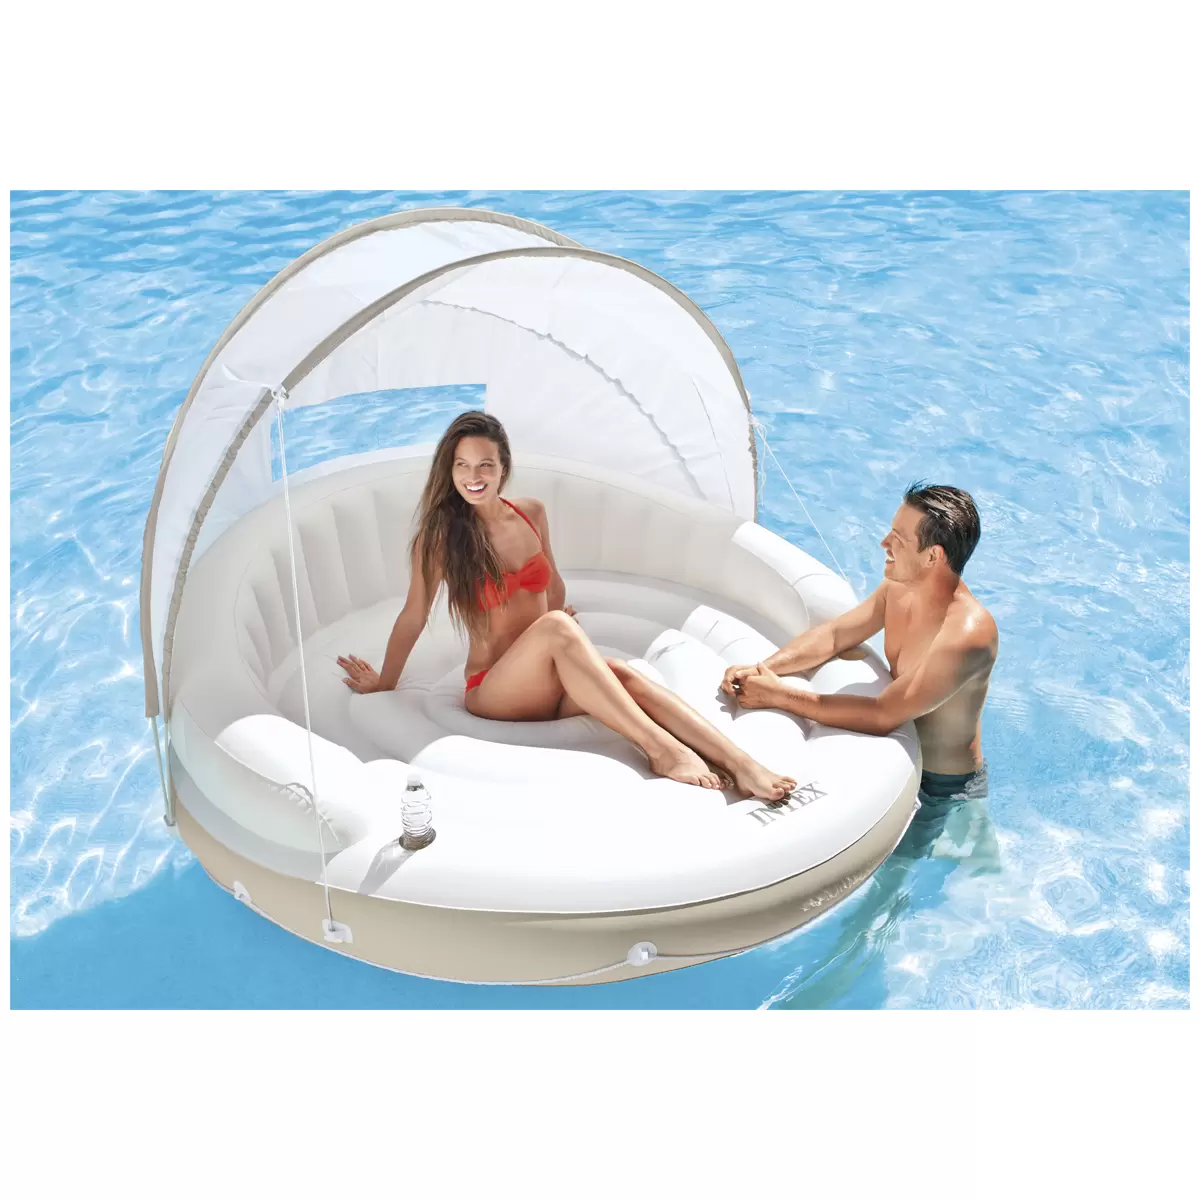 Intex Inflatable Canopy Island